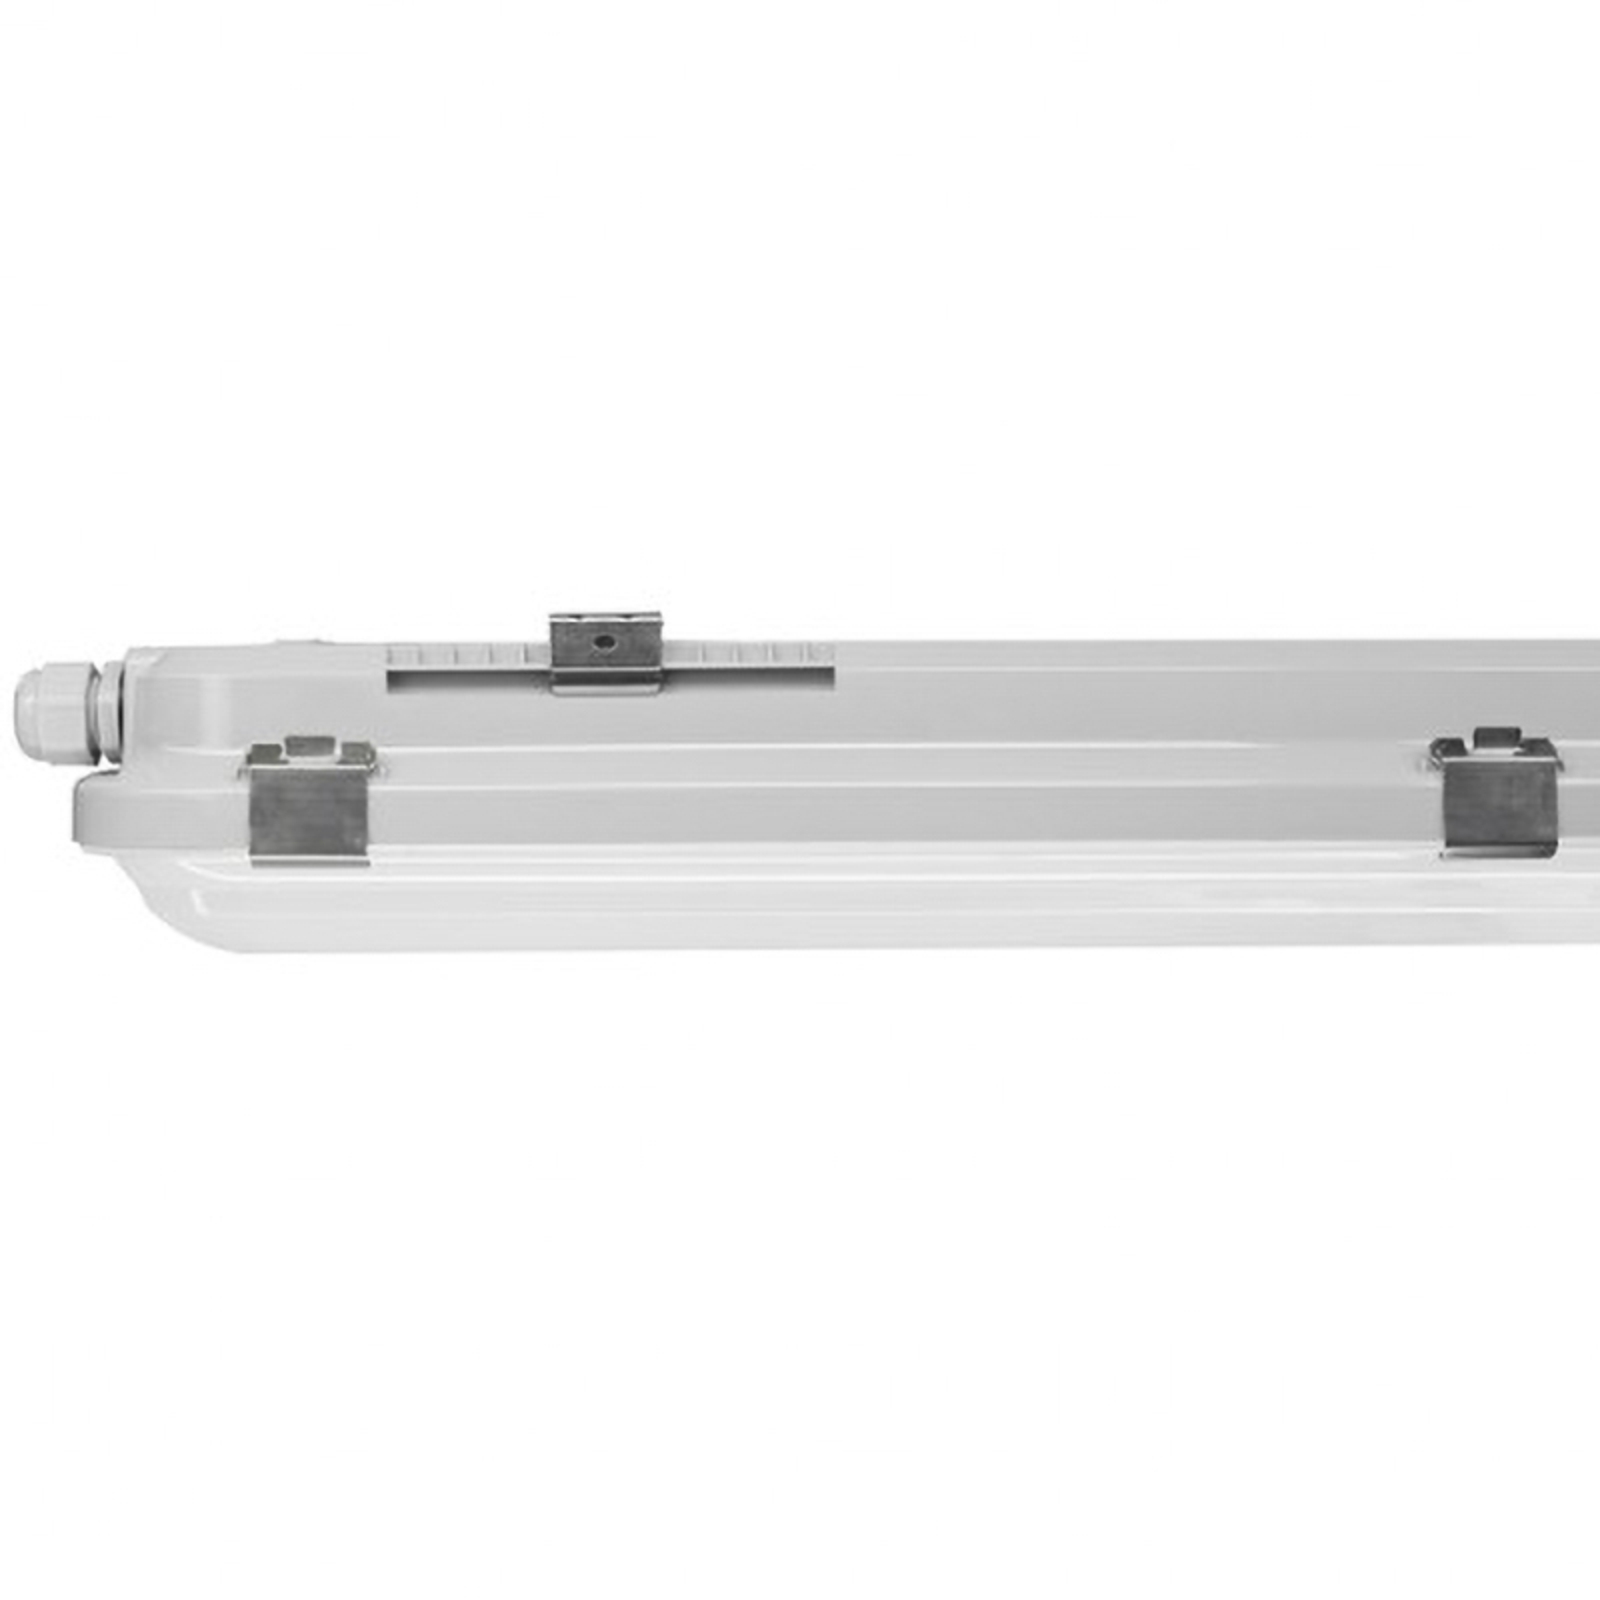 InnoGreen AQUOS 3.0 BASELine lampa LED 152cm 850